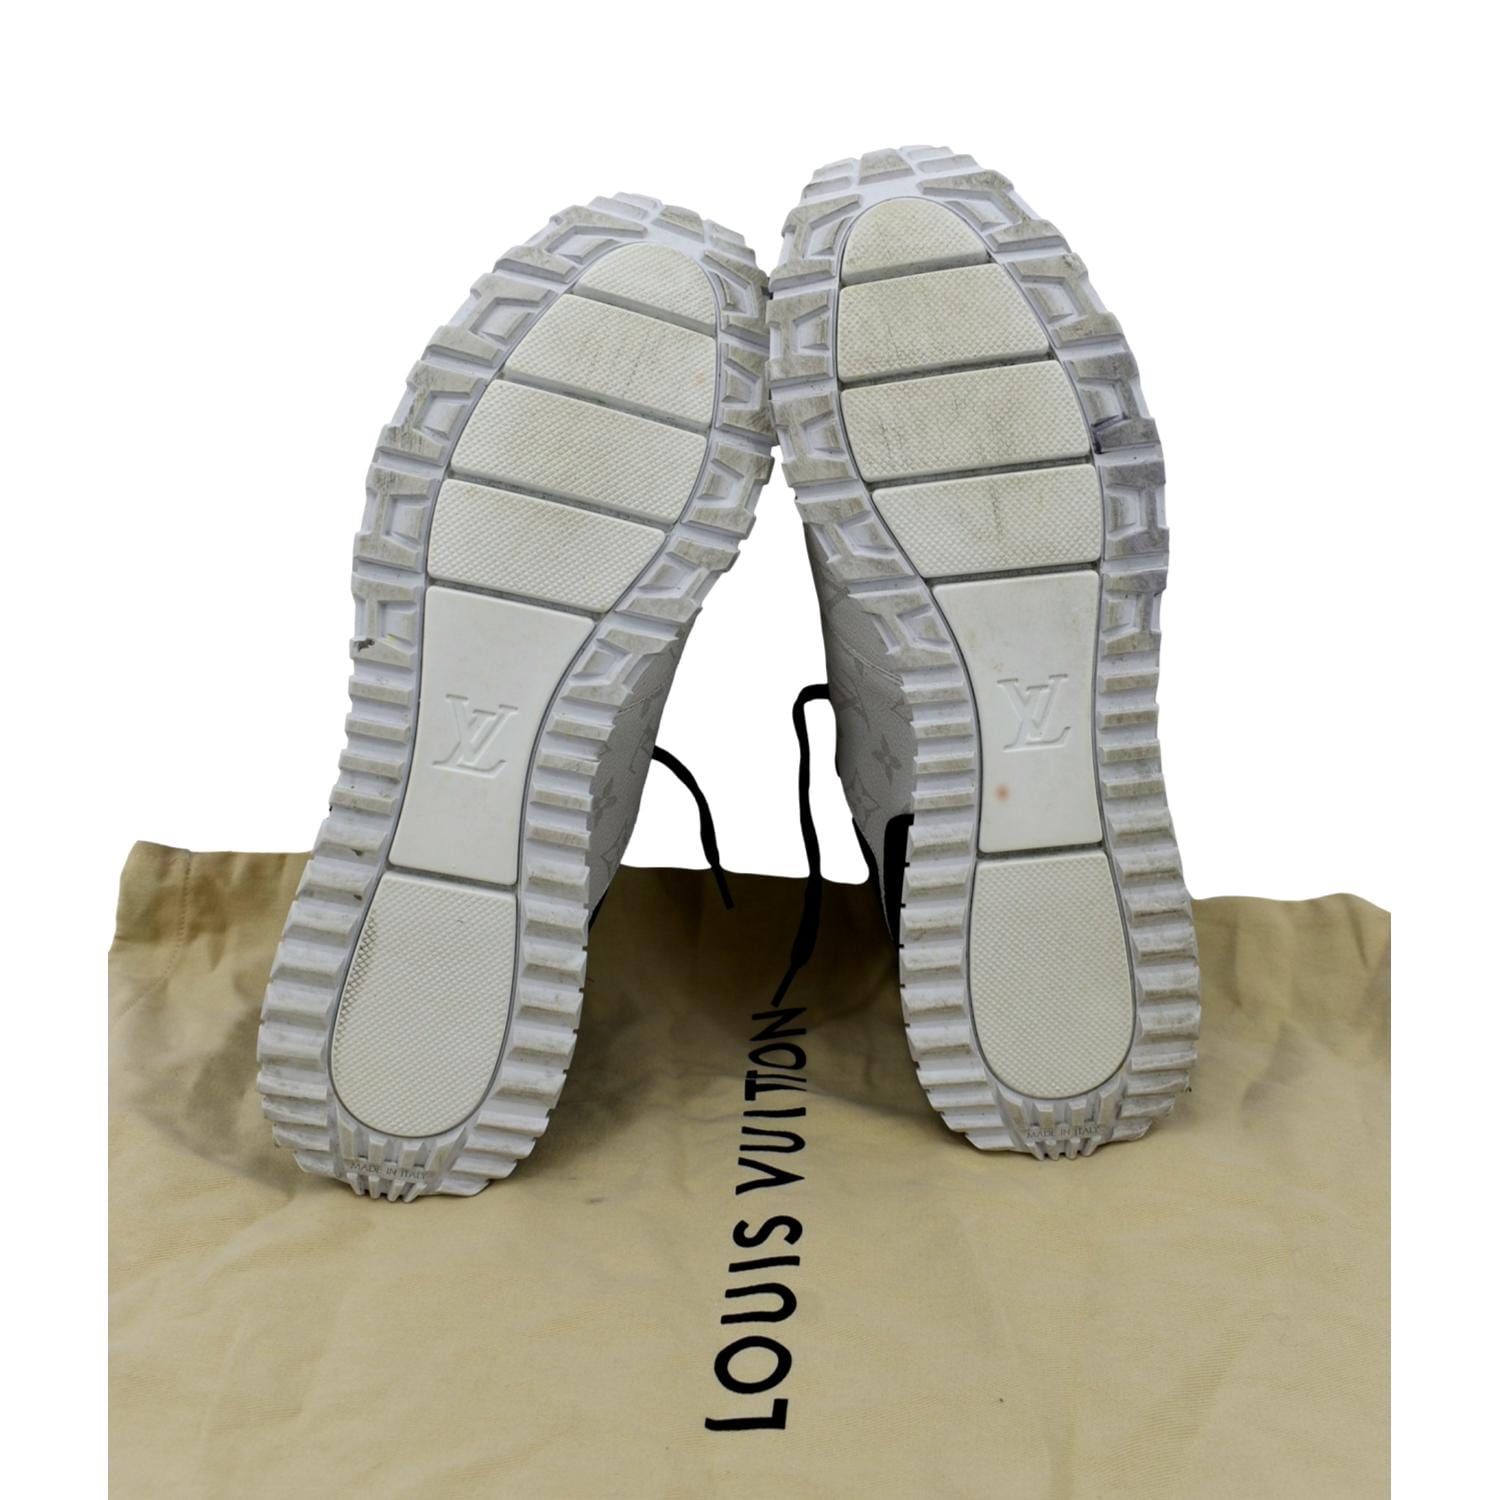 Louis Vuitton, Shoes, Authentic Mens Louis Vuitton Runaway Sneaker Size  43 Dust Bag Box Included